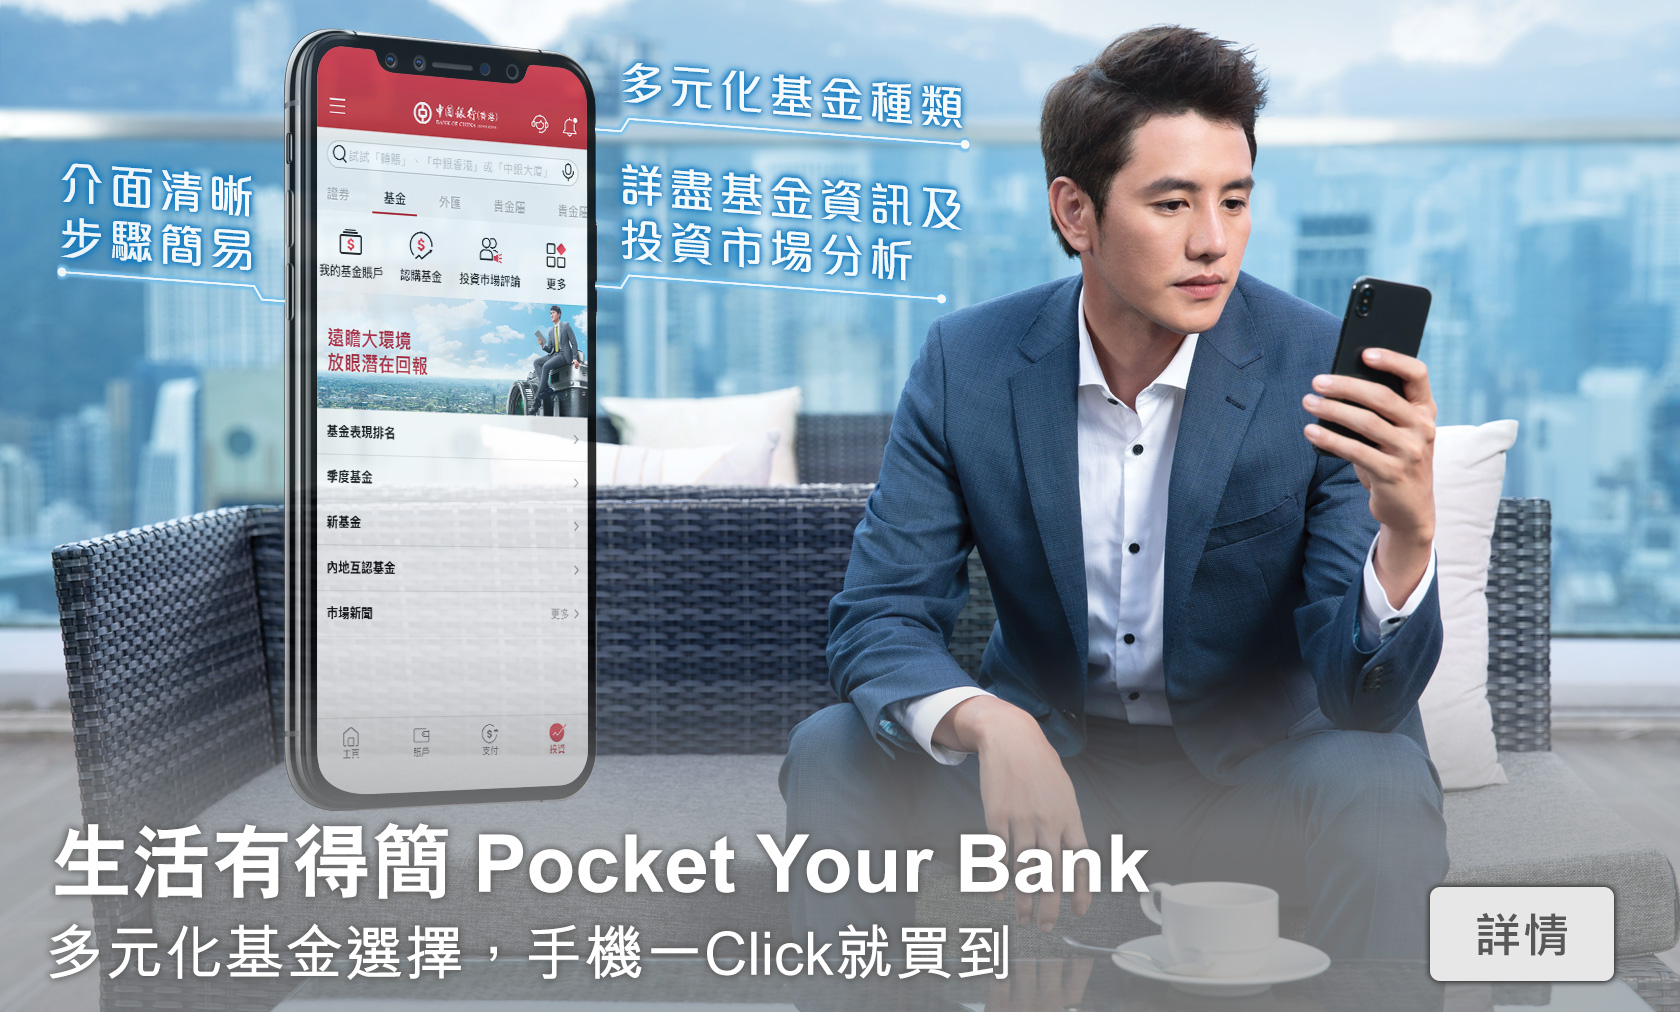 生活有得簡 Pocket Your Bank
        多元化基金選擇，手機一Click就買到